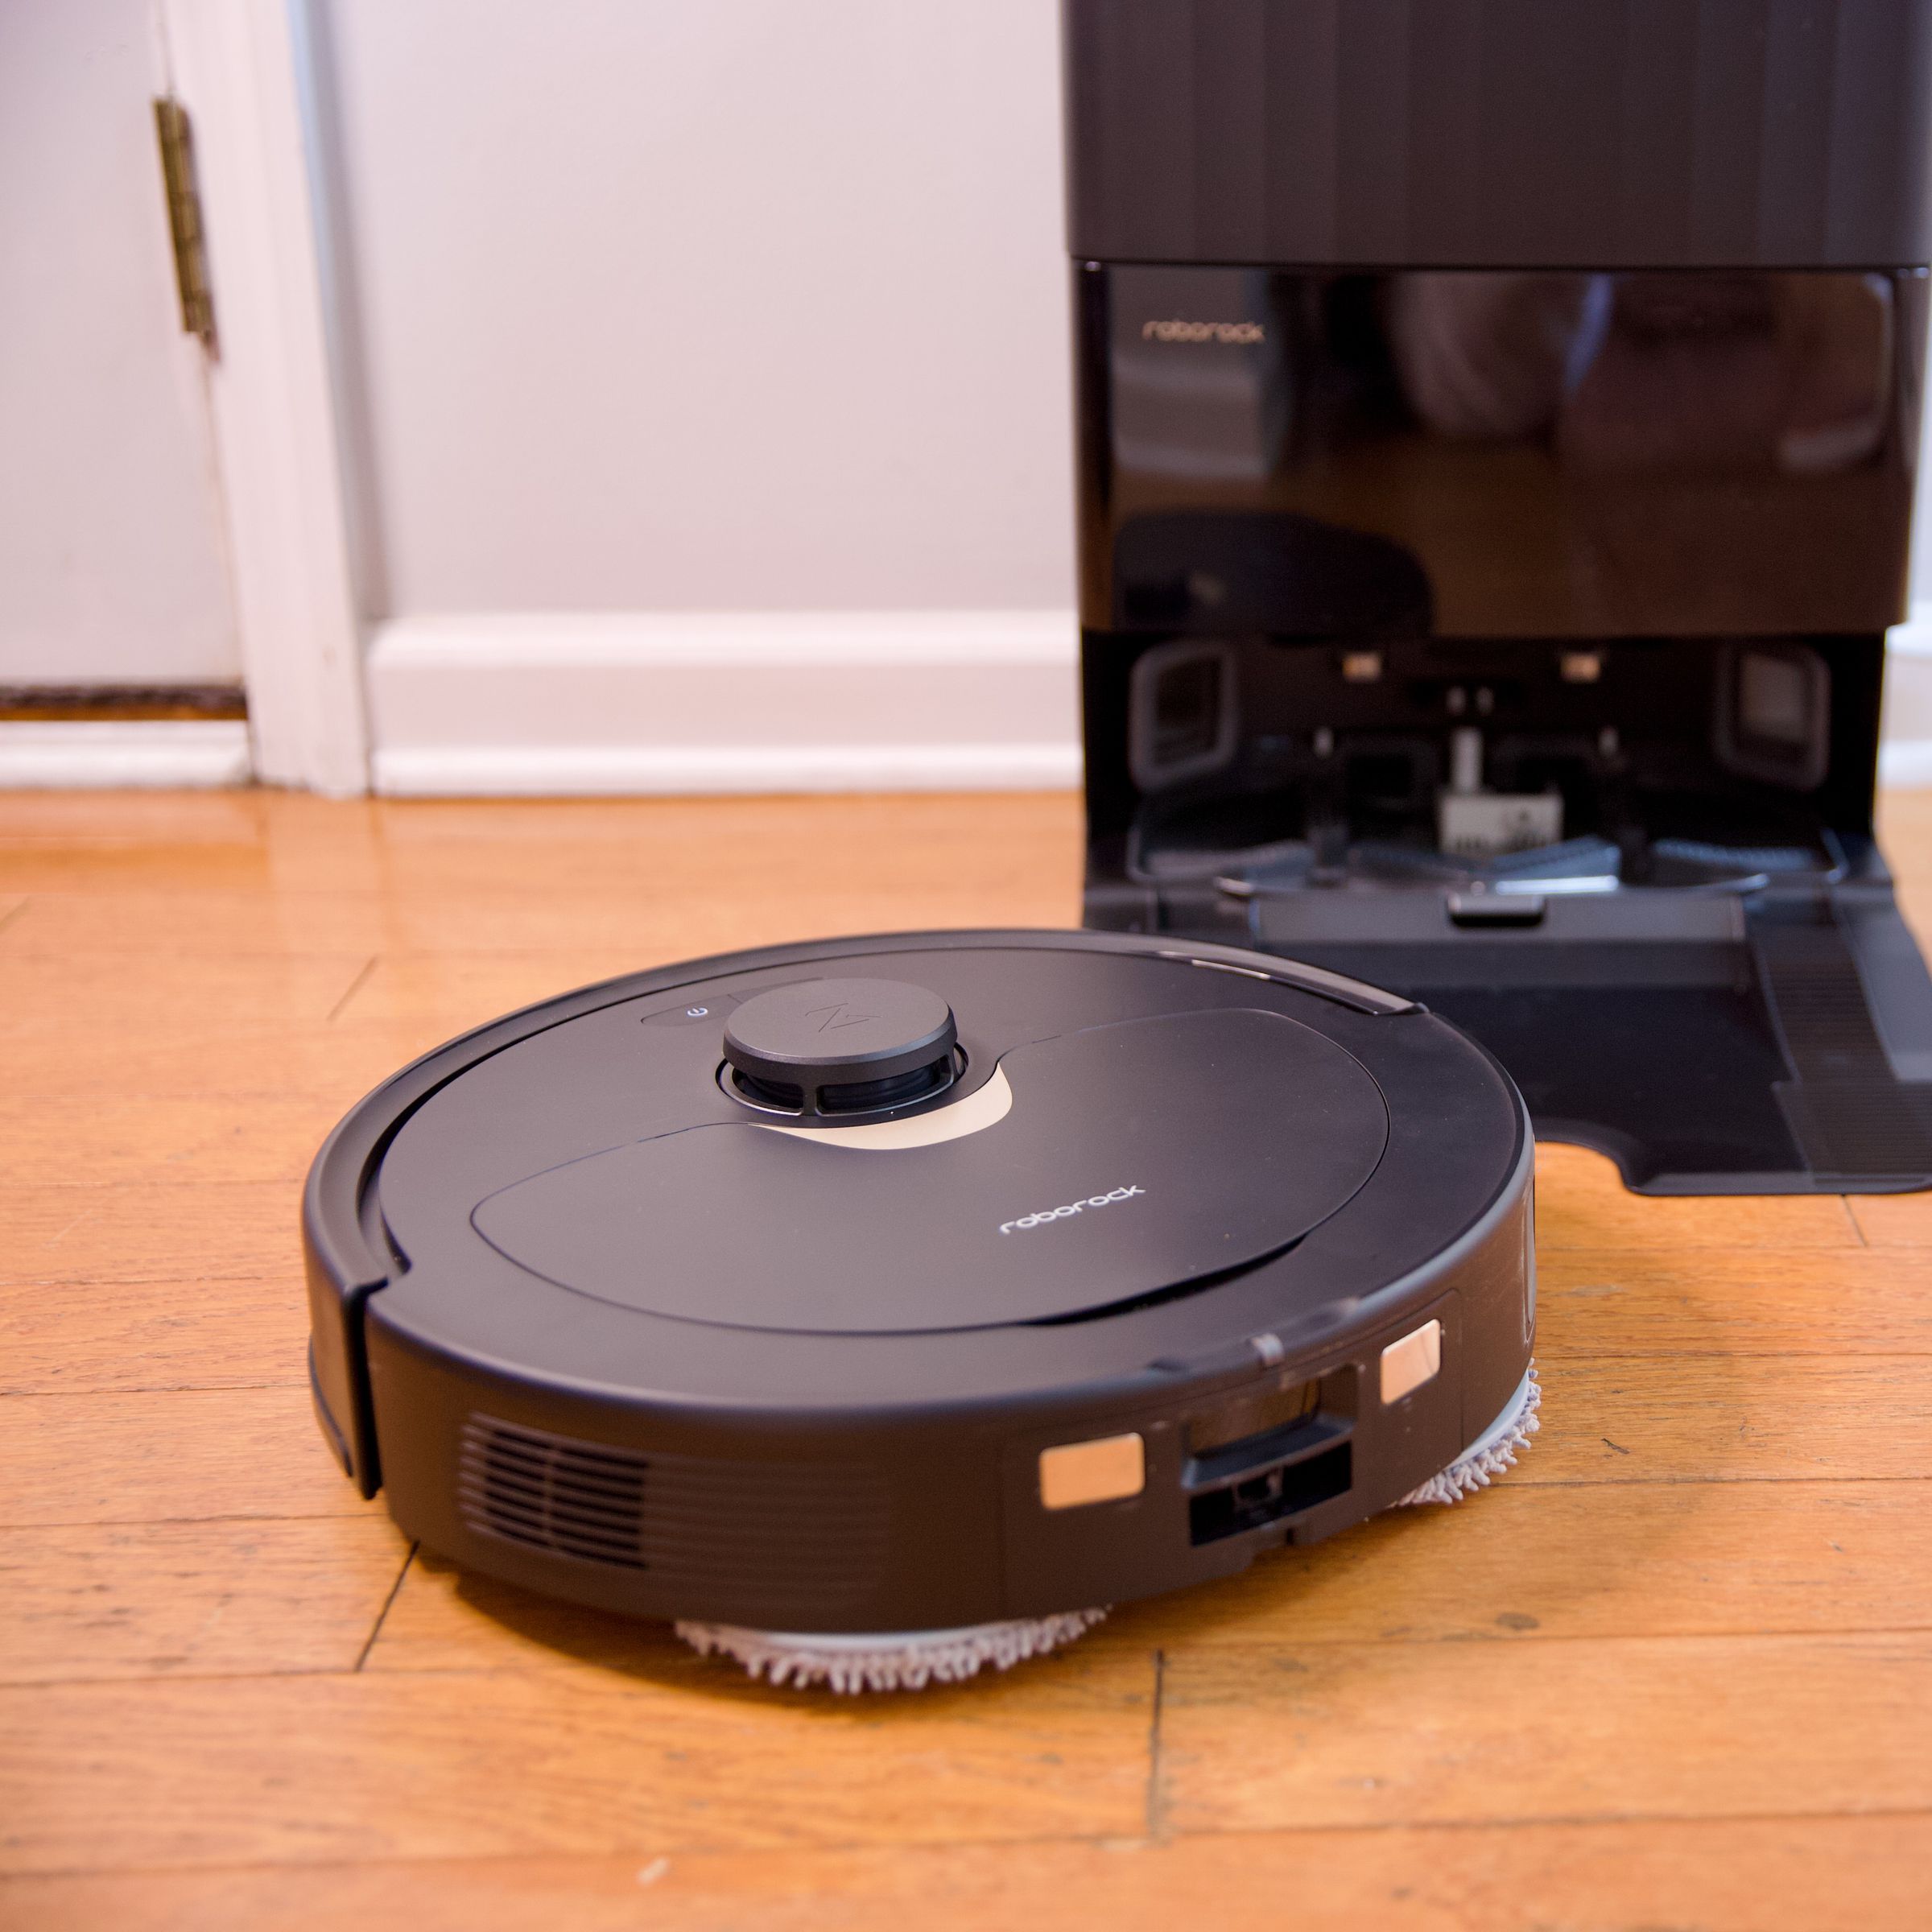 Roborock’s Q Revo robot vacuum sitting on a hardwood floor with its charging dock.